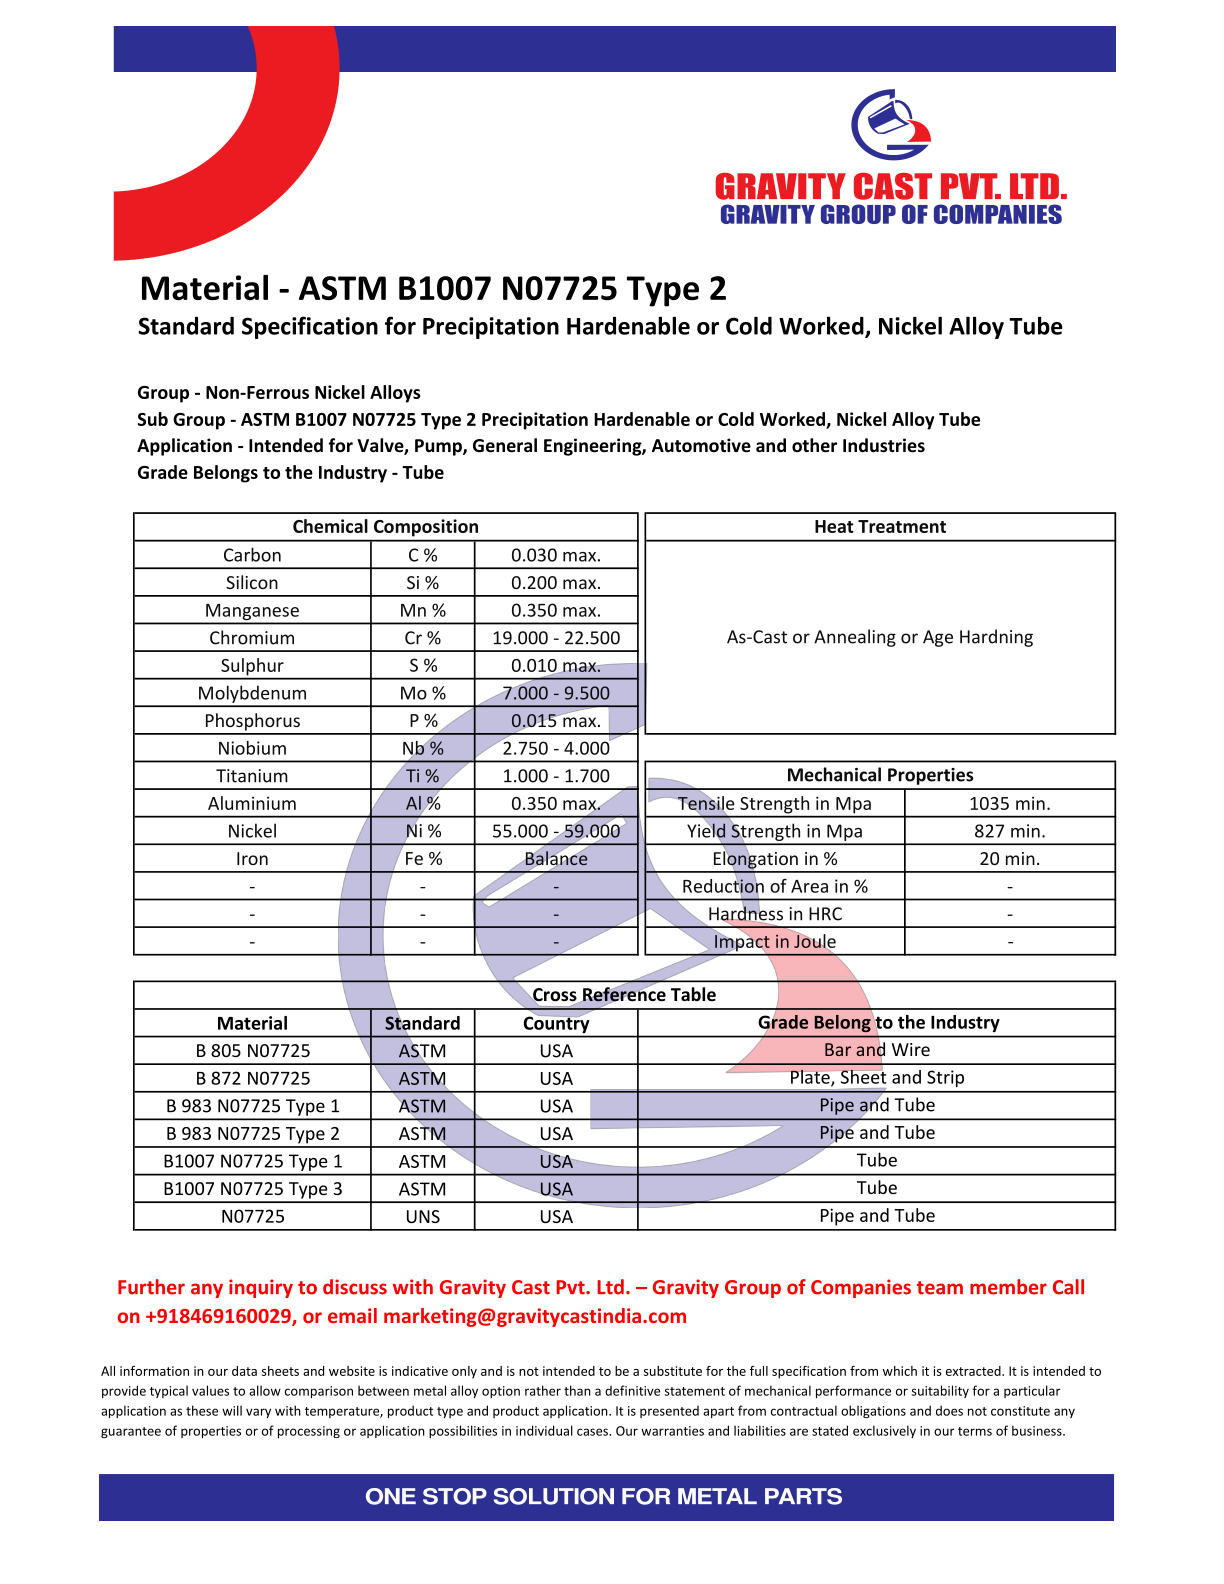 ASTM B1007 N07725 Type 2.pdf